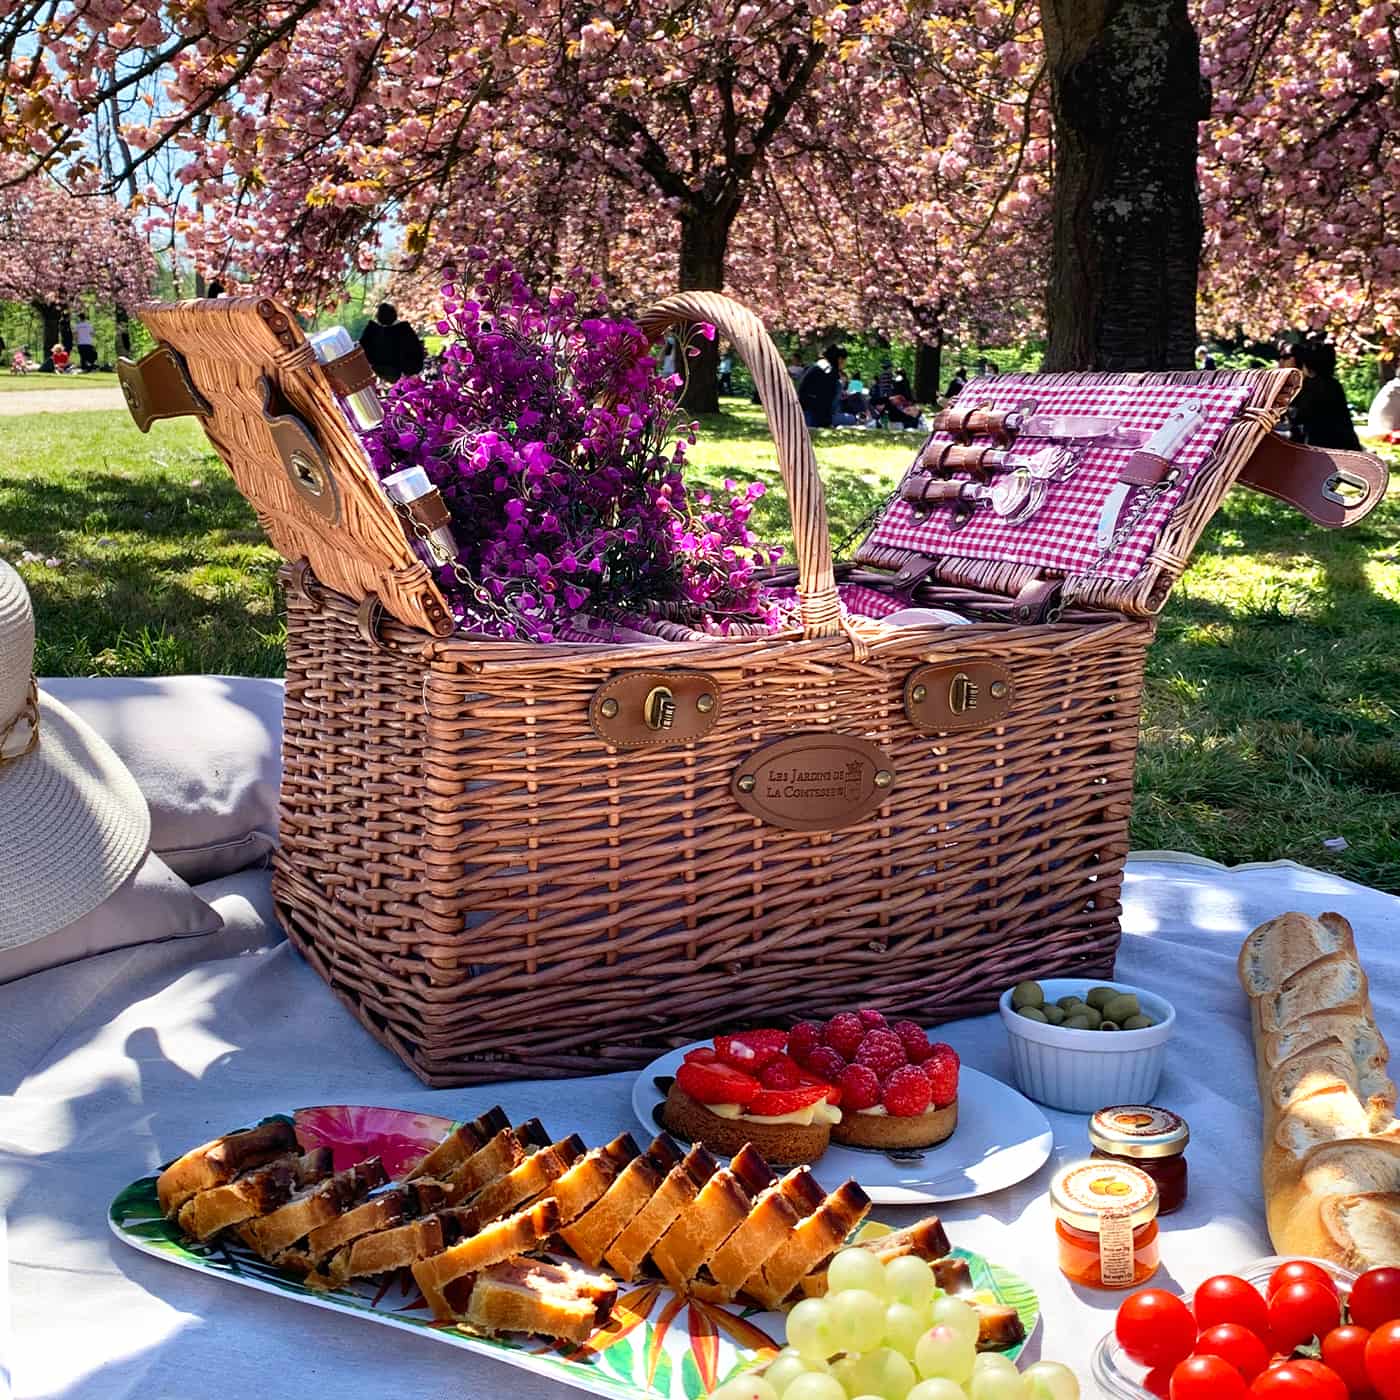 Picknickkorb „Saint-Germain rotkariert“ aus dunkler Weide - 4 Personen